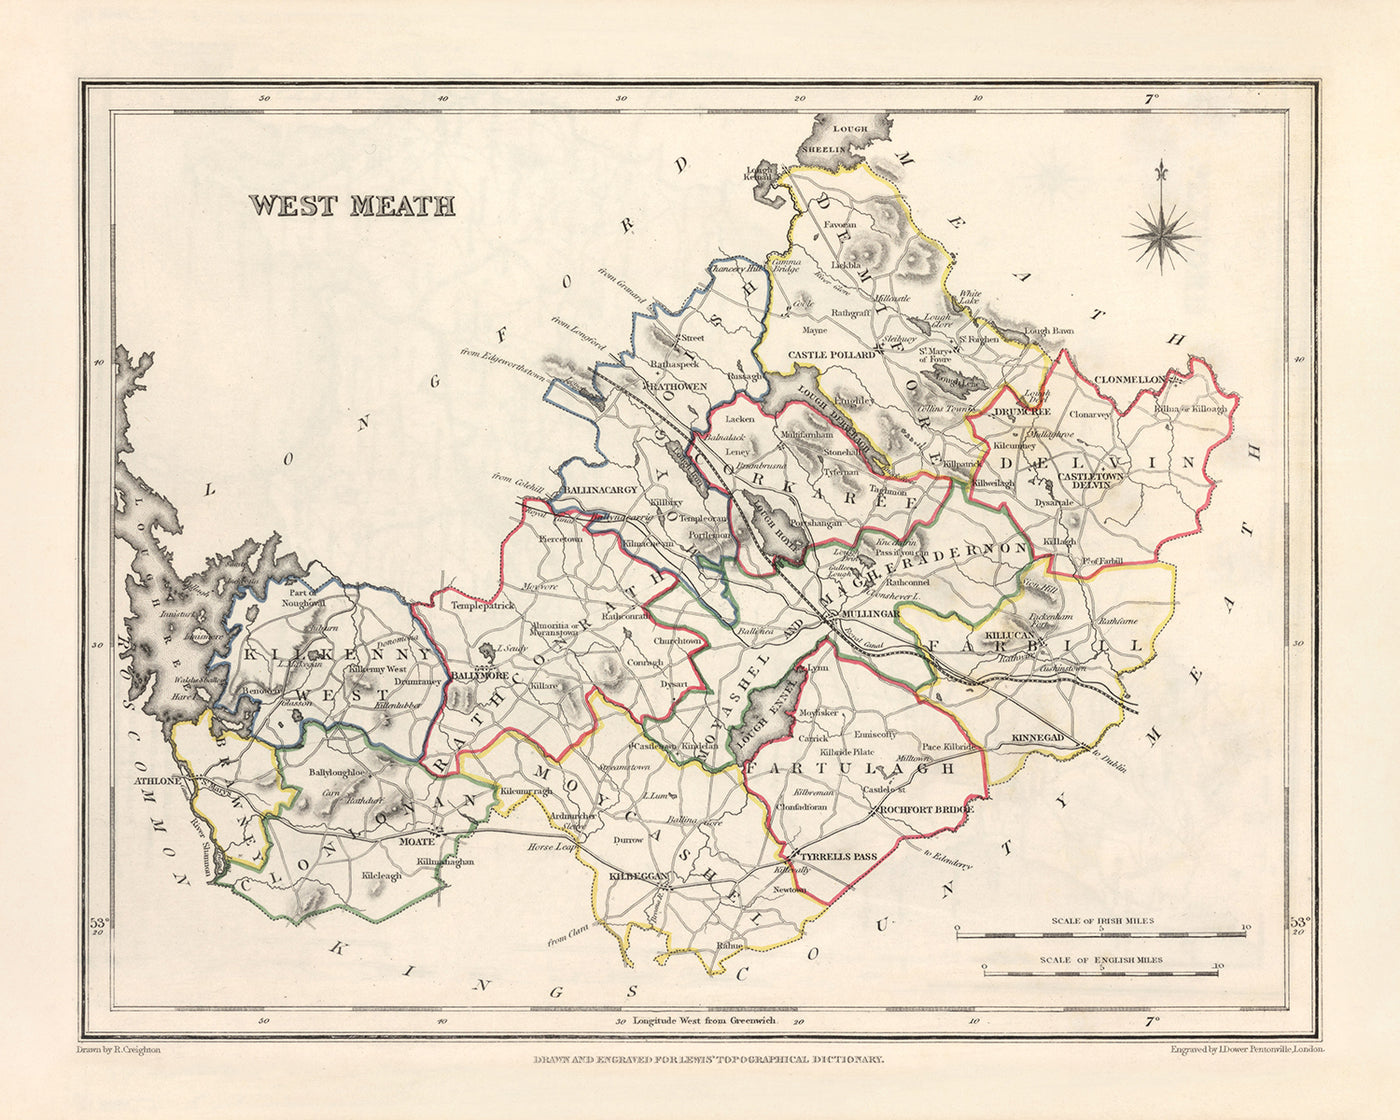 Old Map of County Westmeath by Samuel Lewis, 1844: Mullingar, Athlone, Kilbeggan, Moate, Fore